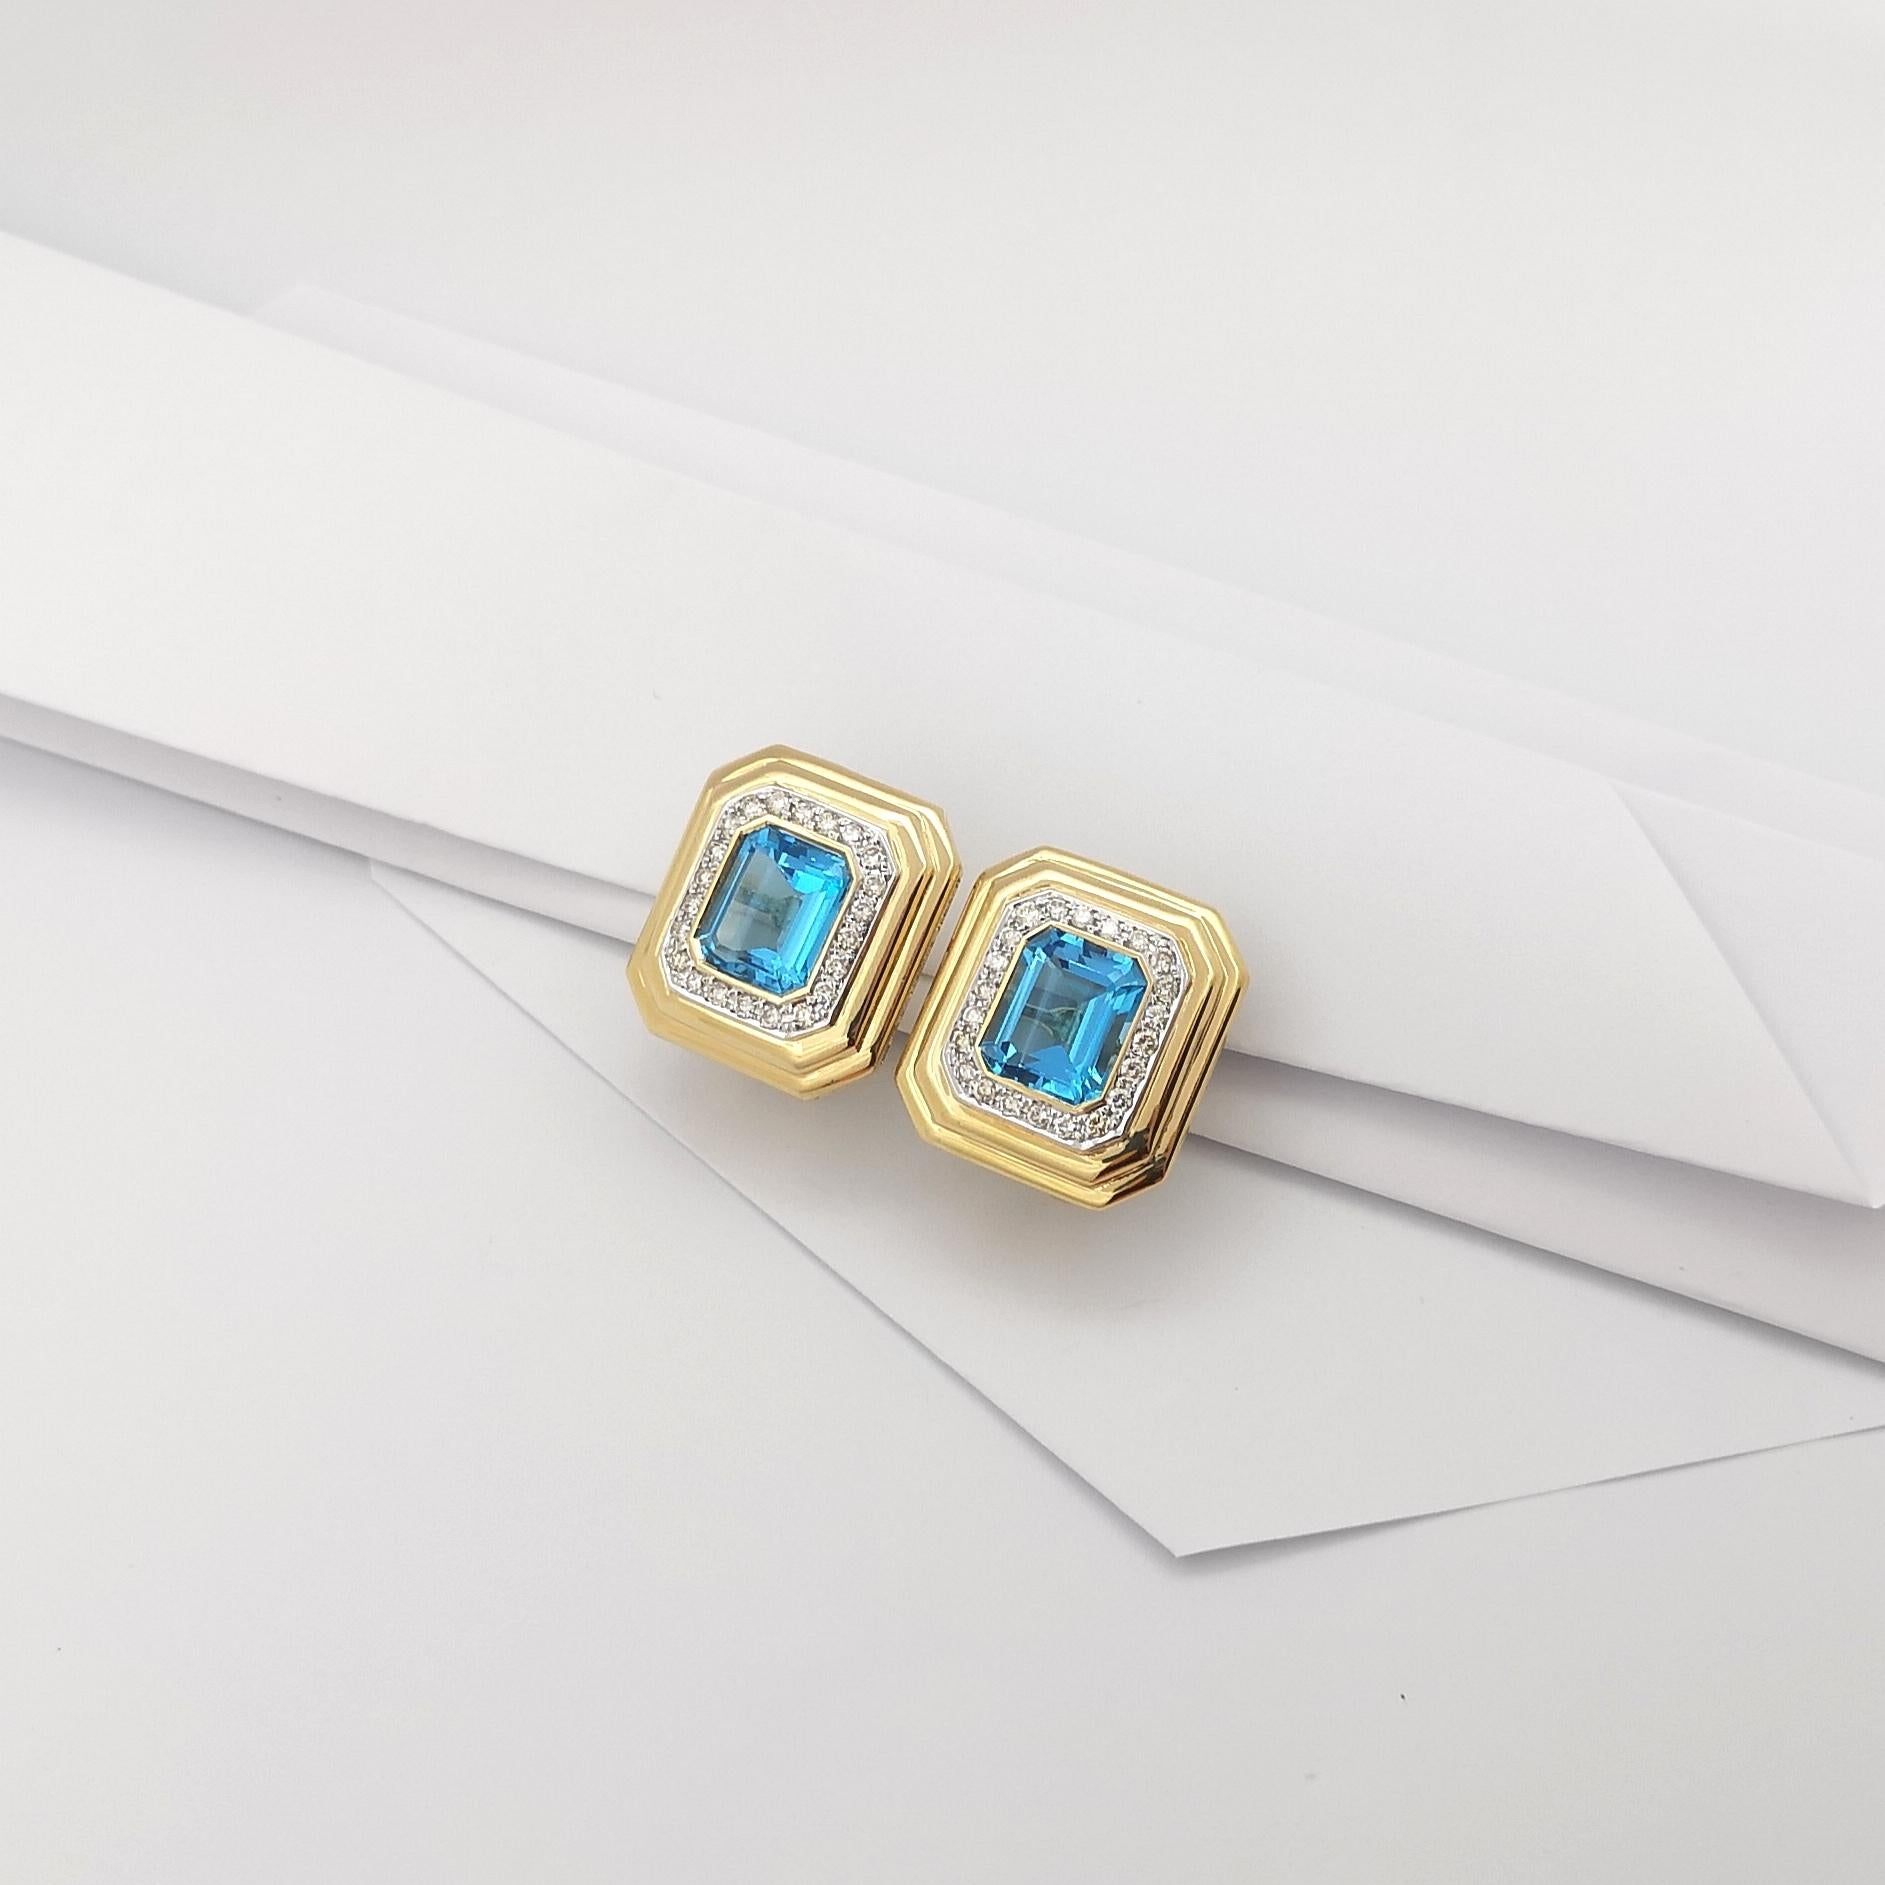 Blue Topaz with Diamond Earrings set in 14K Gold Settings For Sale 2